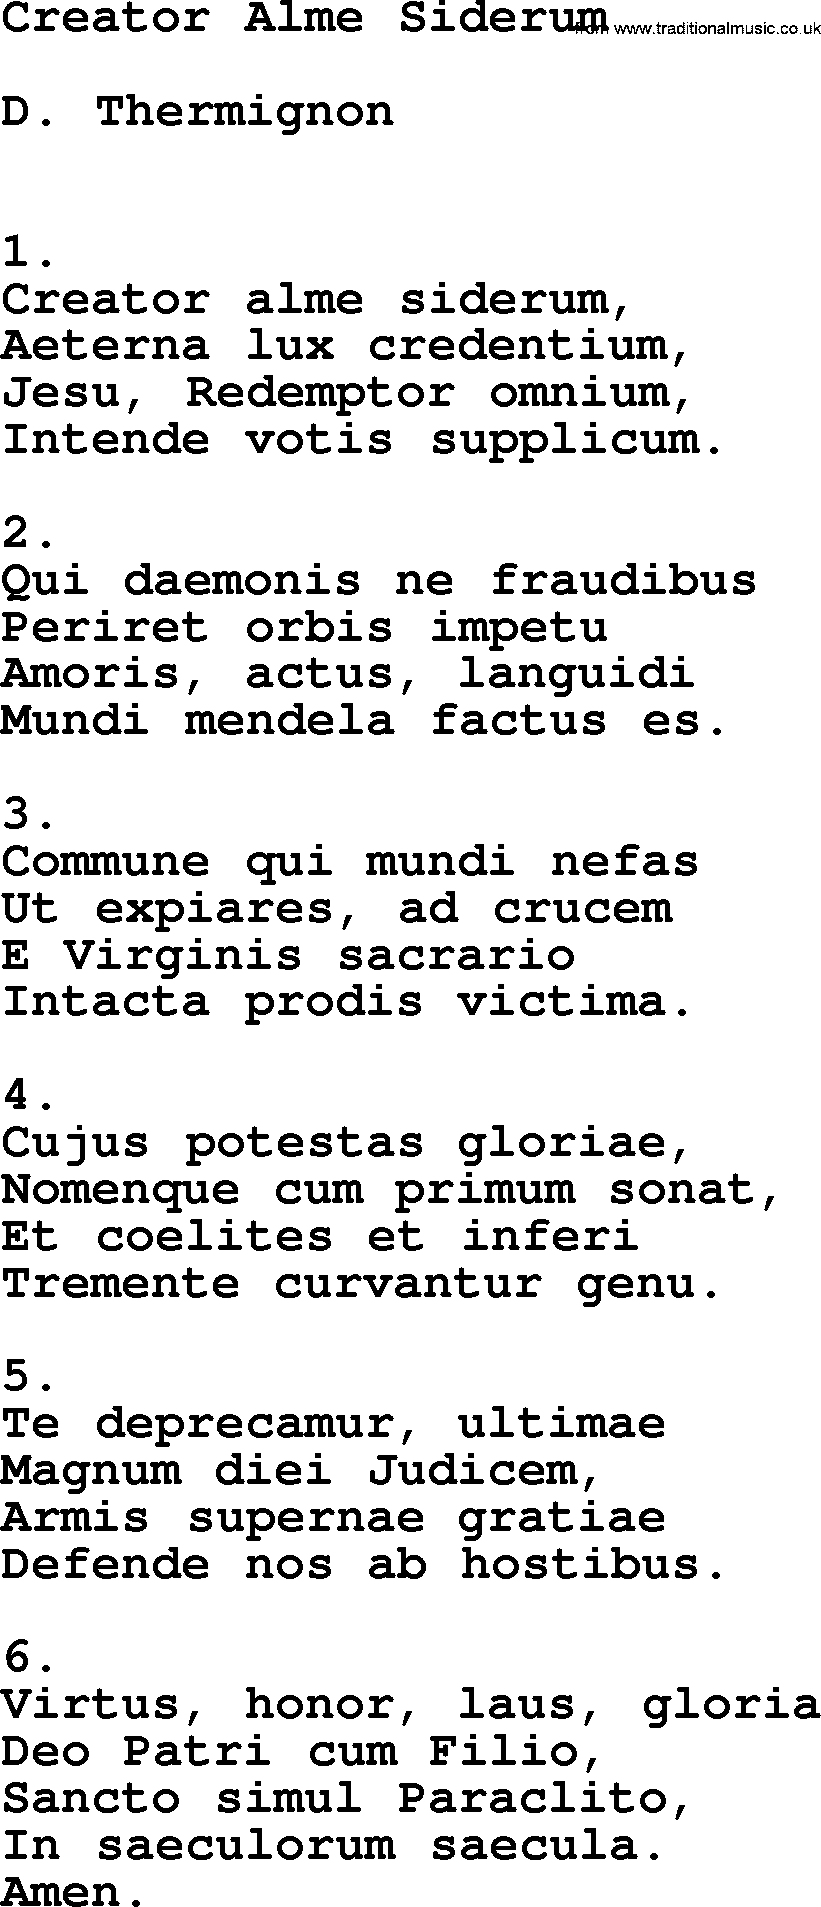 Catholic Hymn: Creator Alme Siderum lyrics with PDF